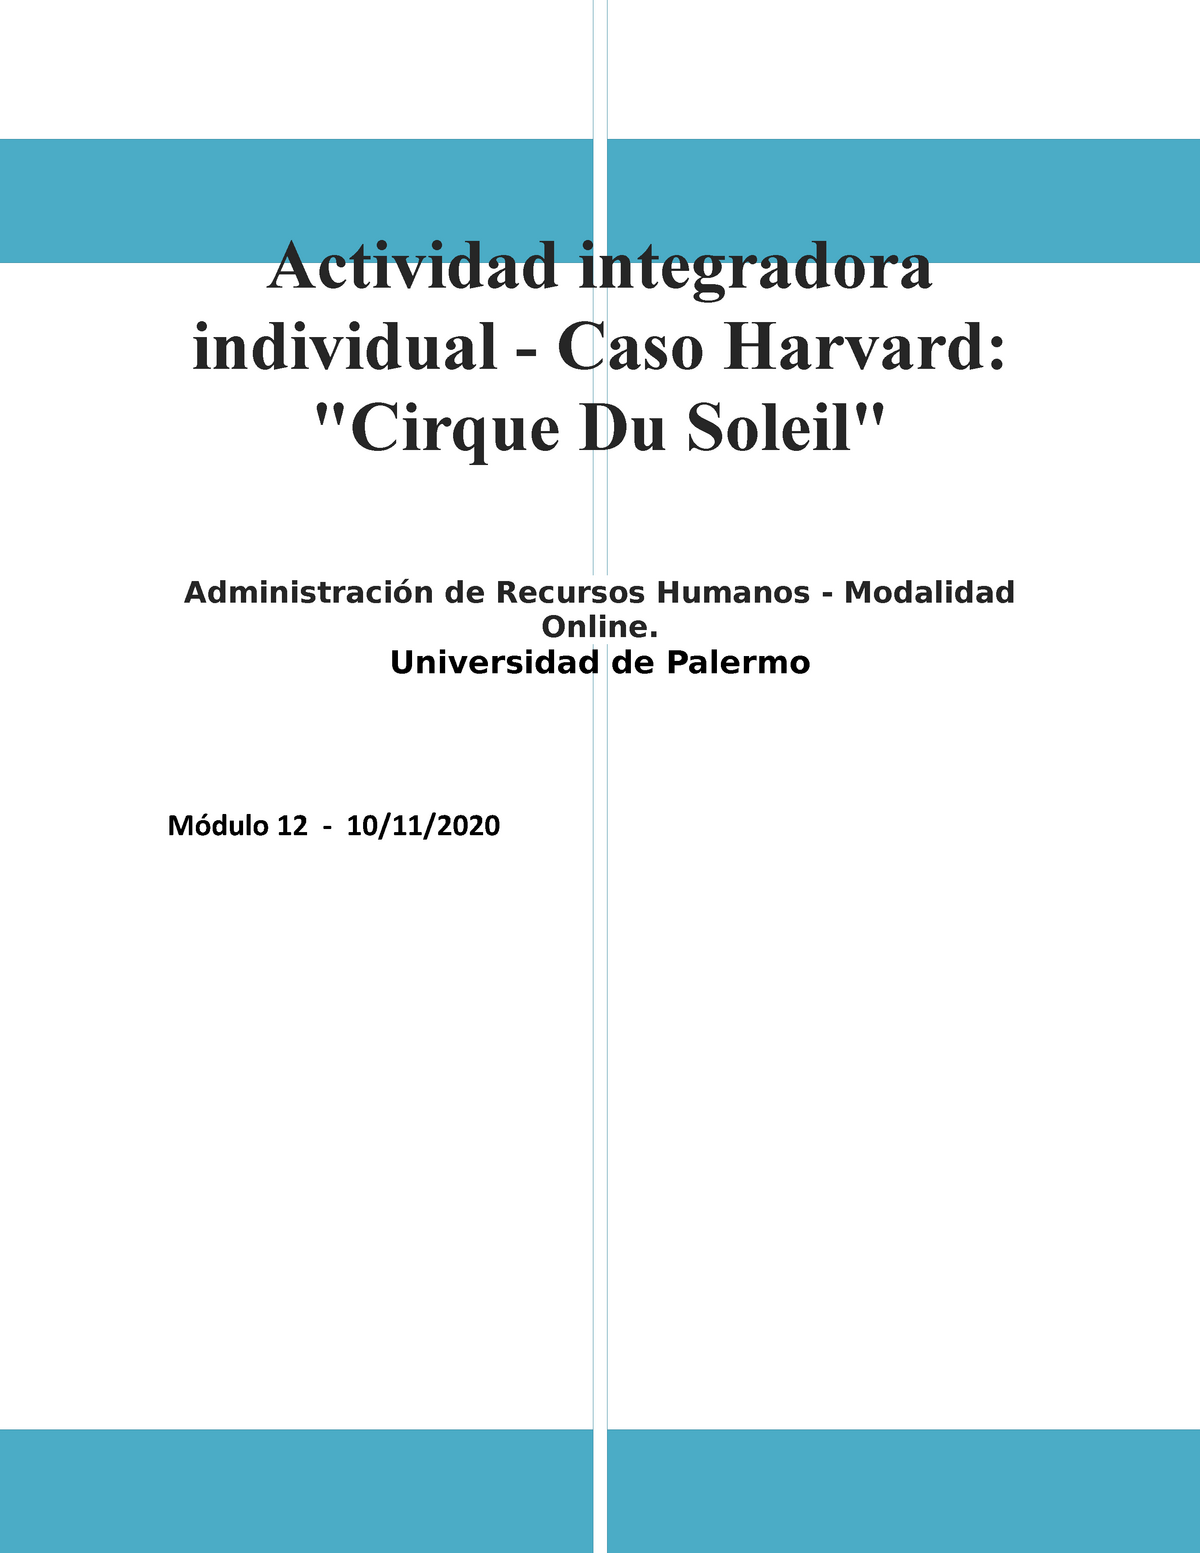 cirque du soleil harvard case study pdf